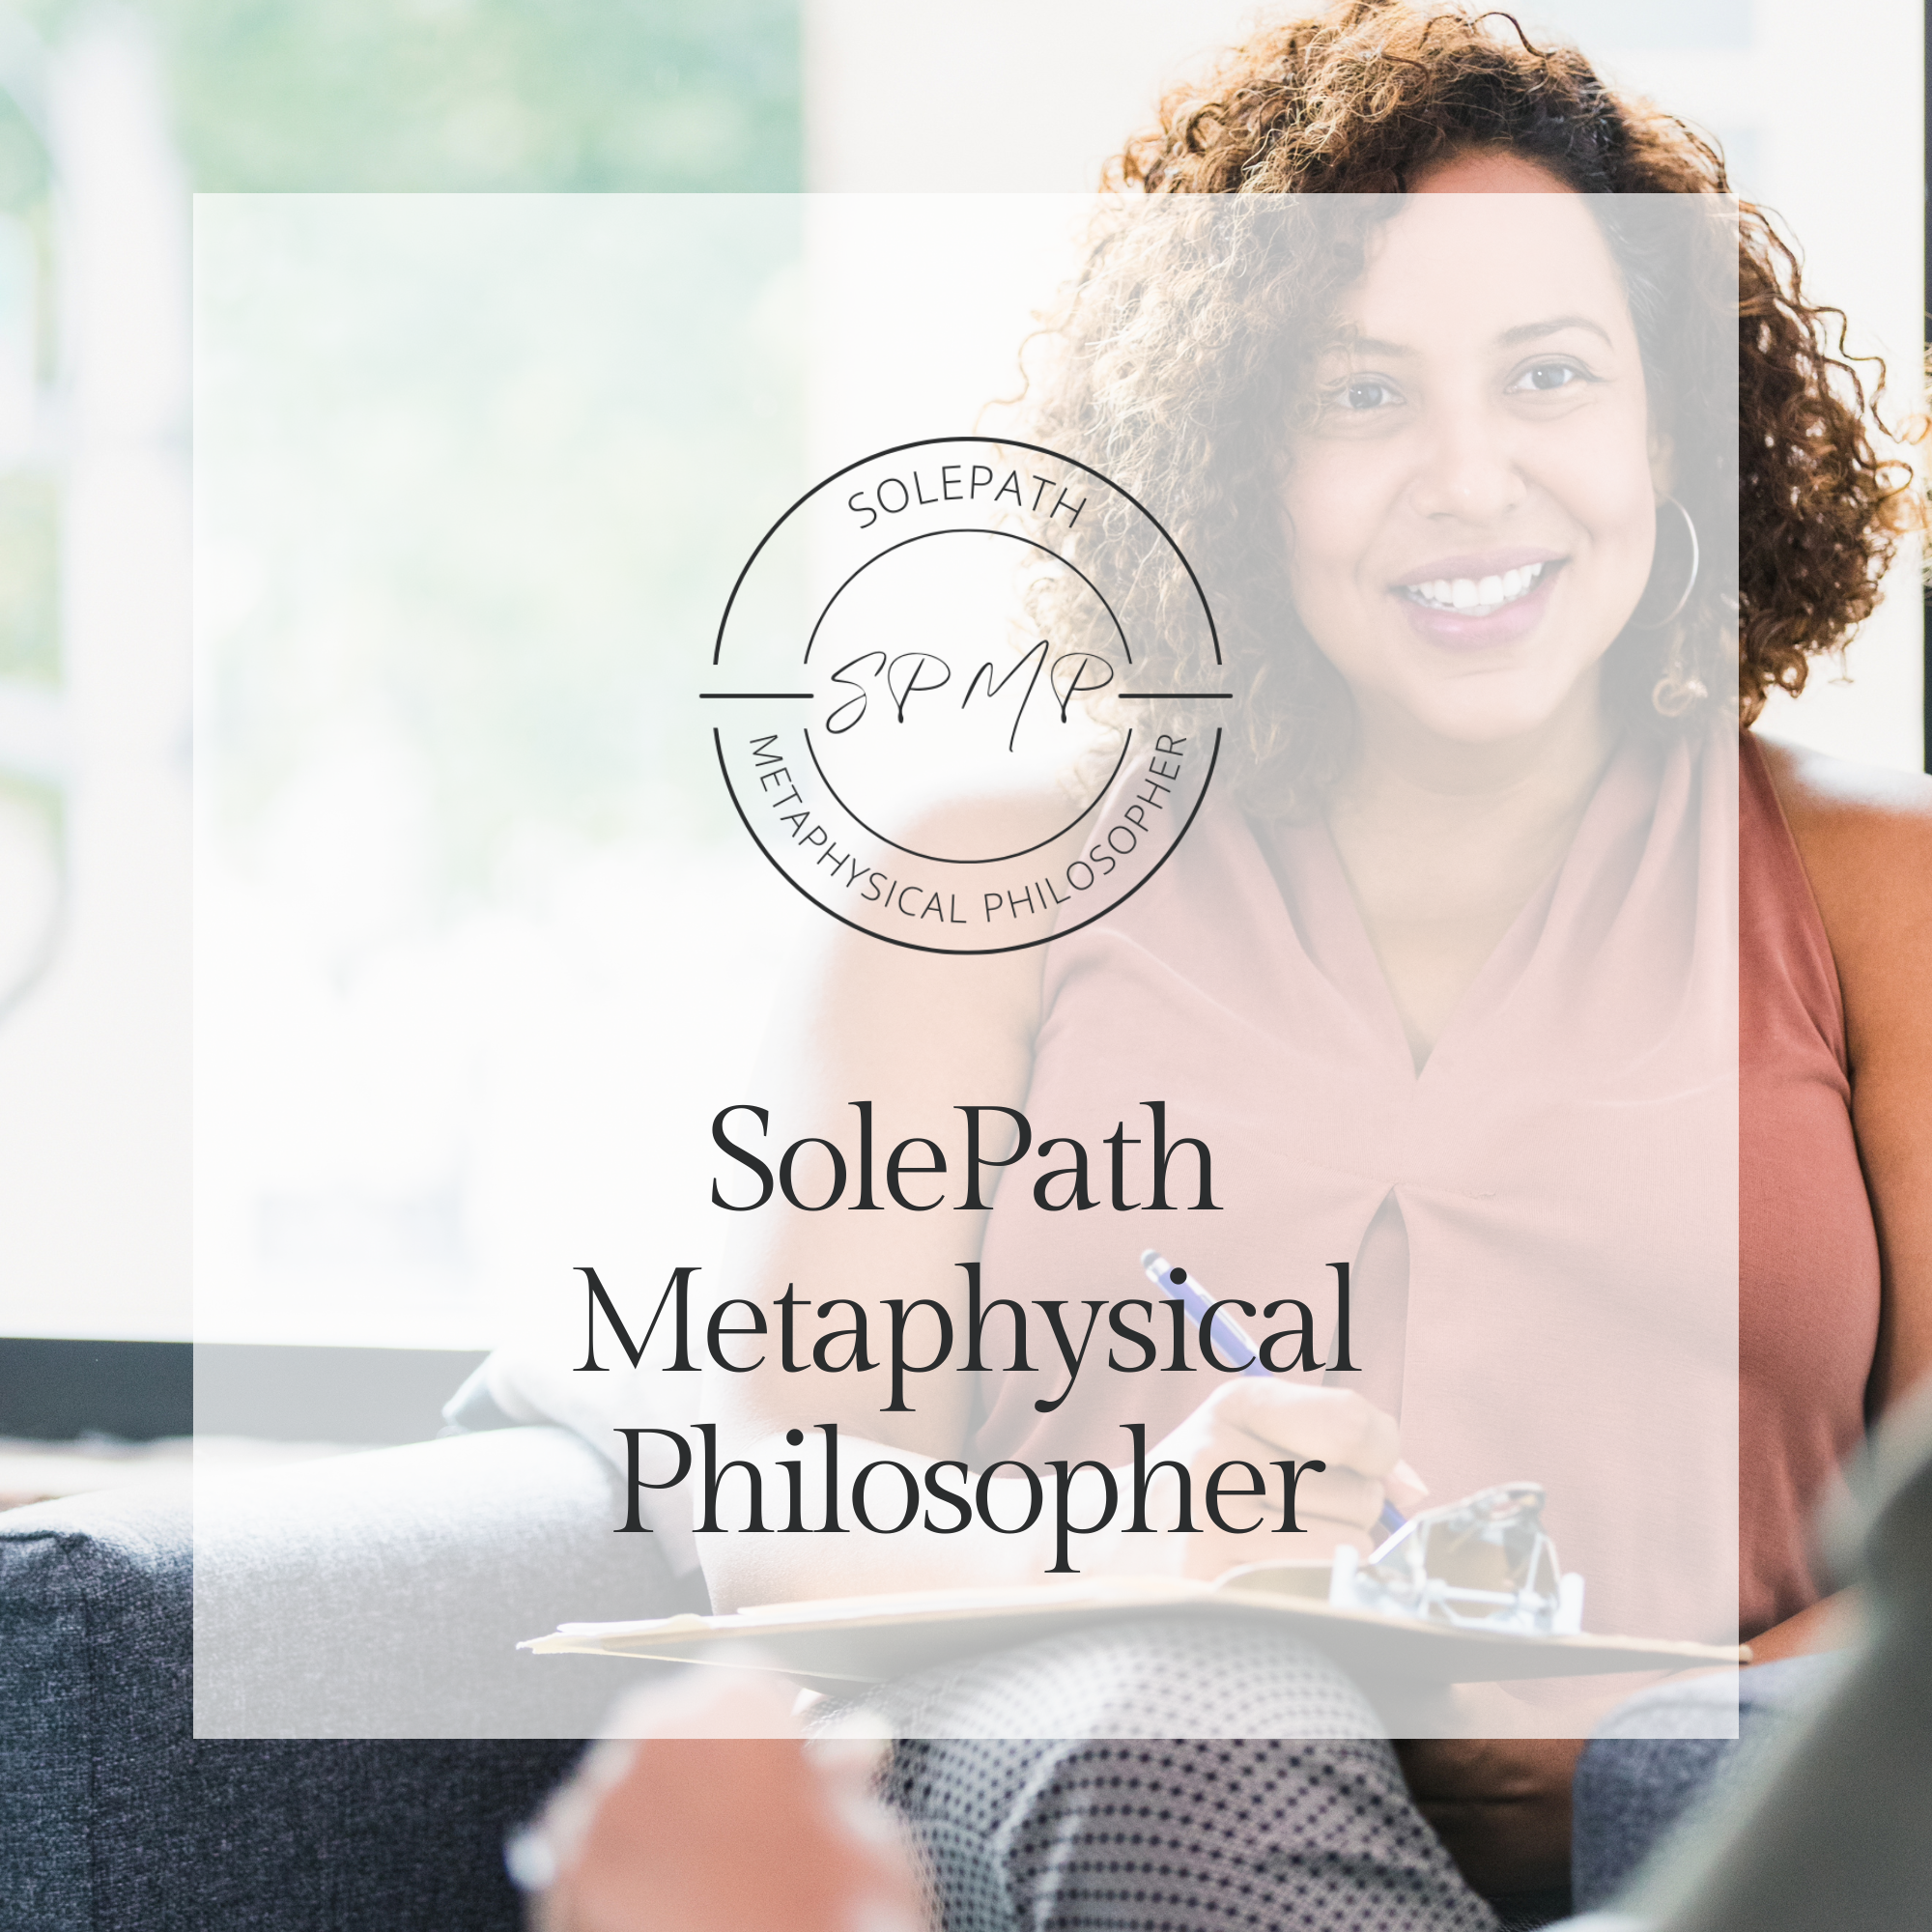 SolePath Metaphysical Philosopher